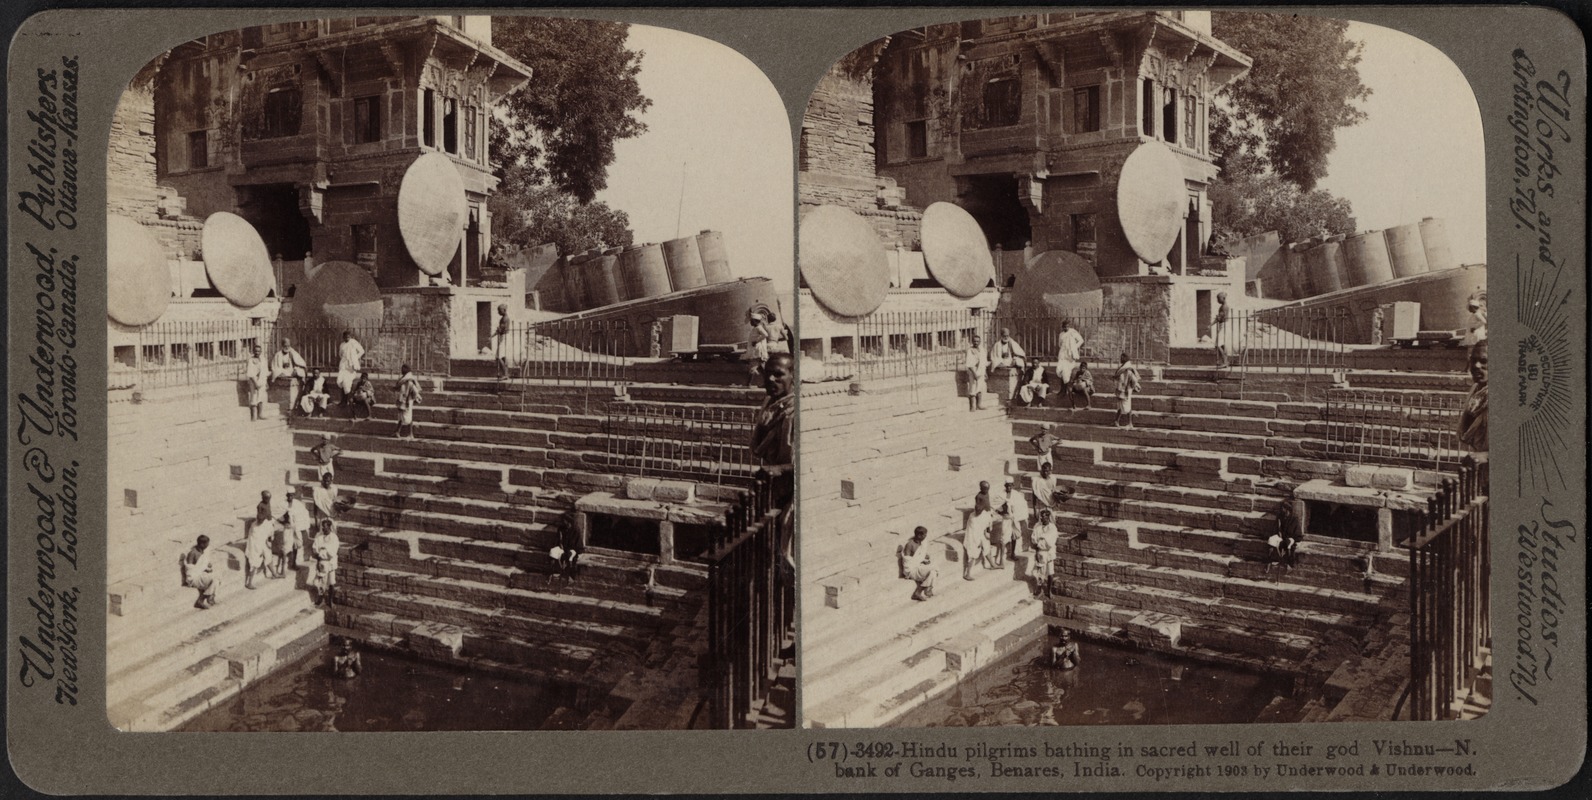 Hindu pilgrims bathing in the well of Vishnu, Benares, India